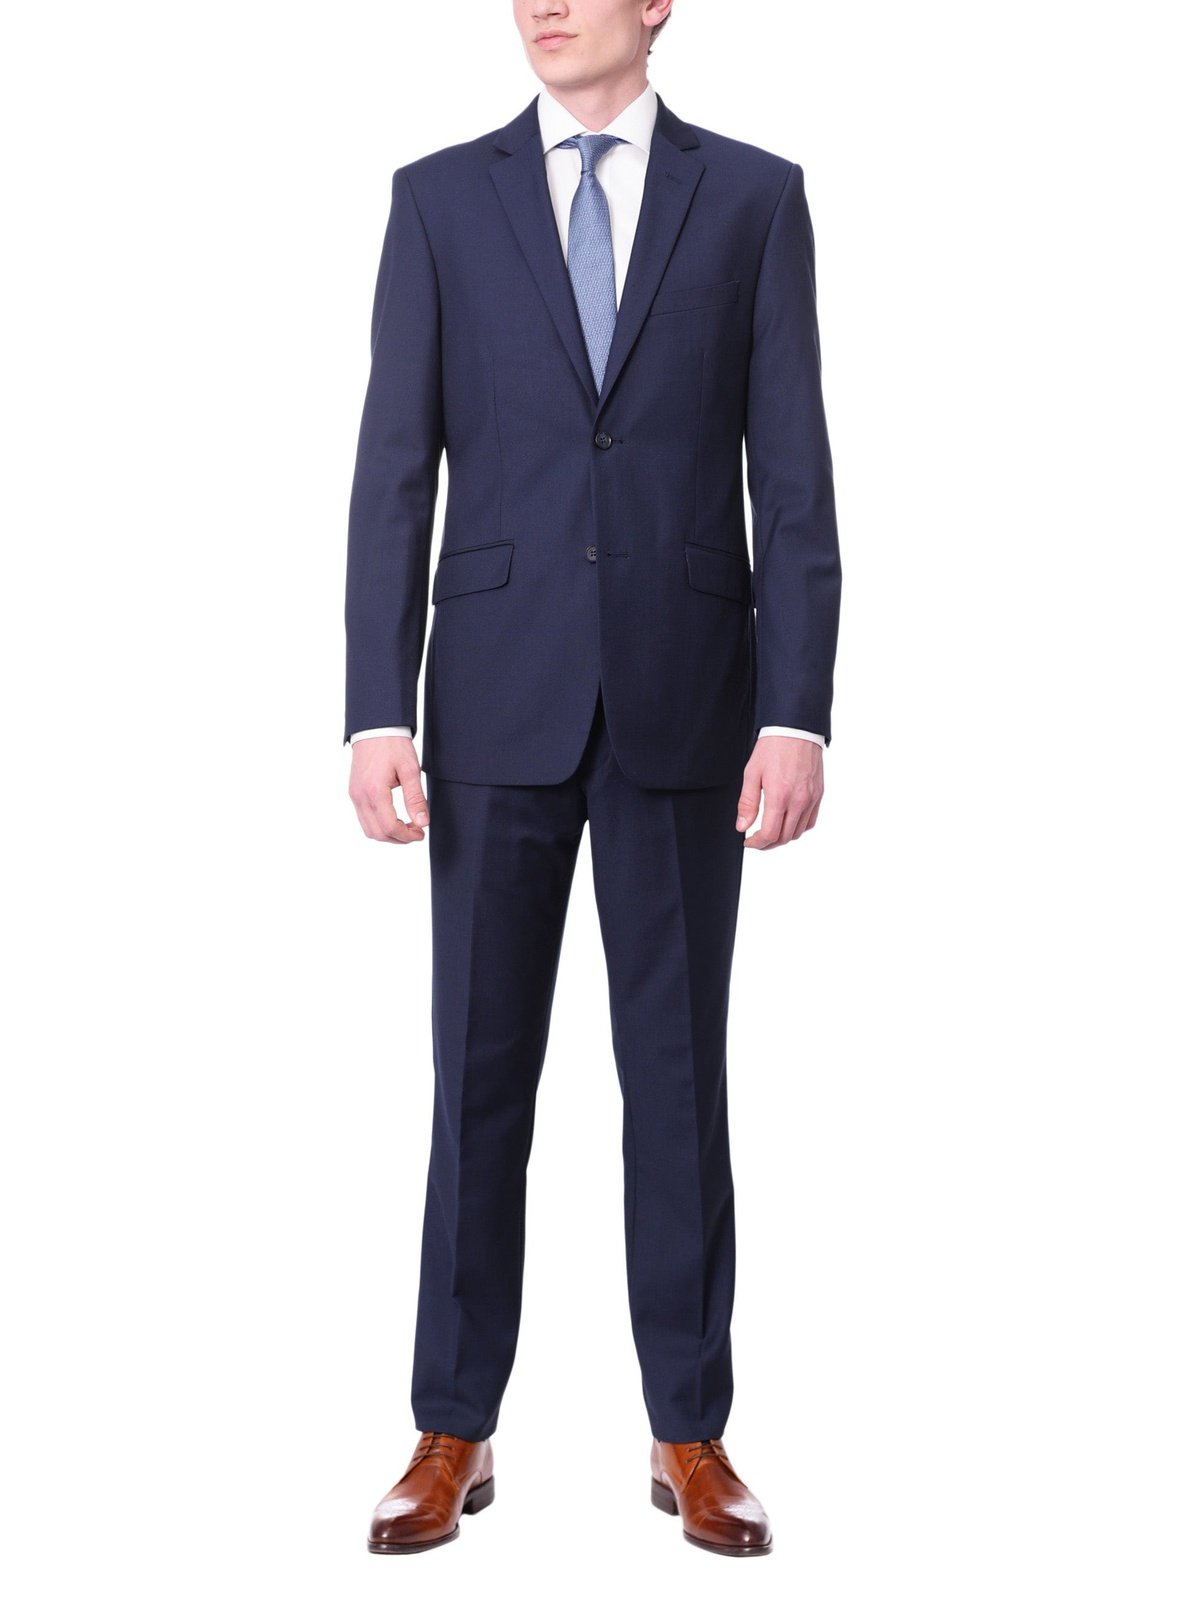 Raphael Bestselling Items Men's Raphael Slim Fit Wool-touch Solid Blue Two Button 2 Piece Suit Jacket & Pants